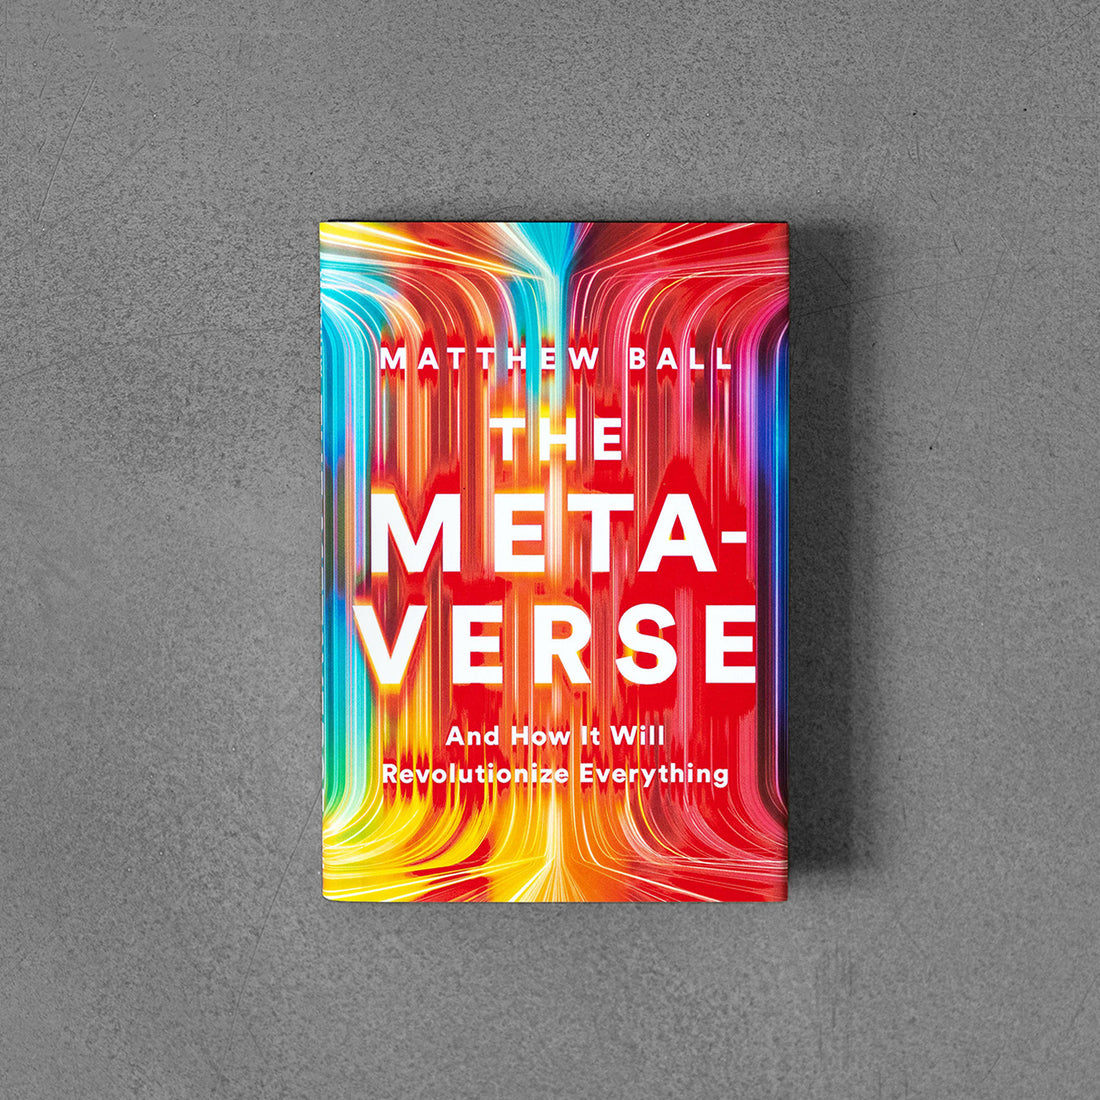 Metaverse - Matthew Ball